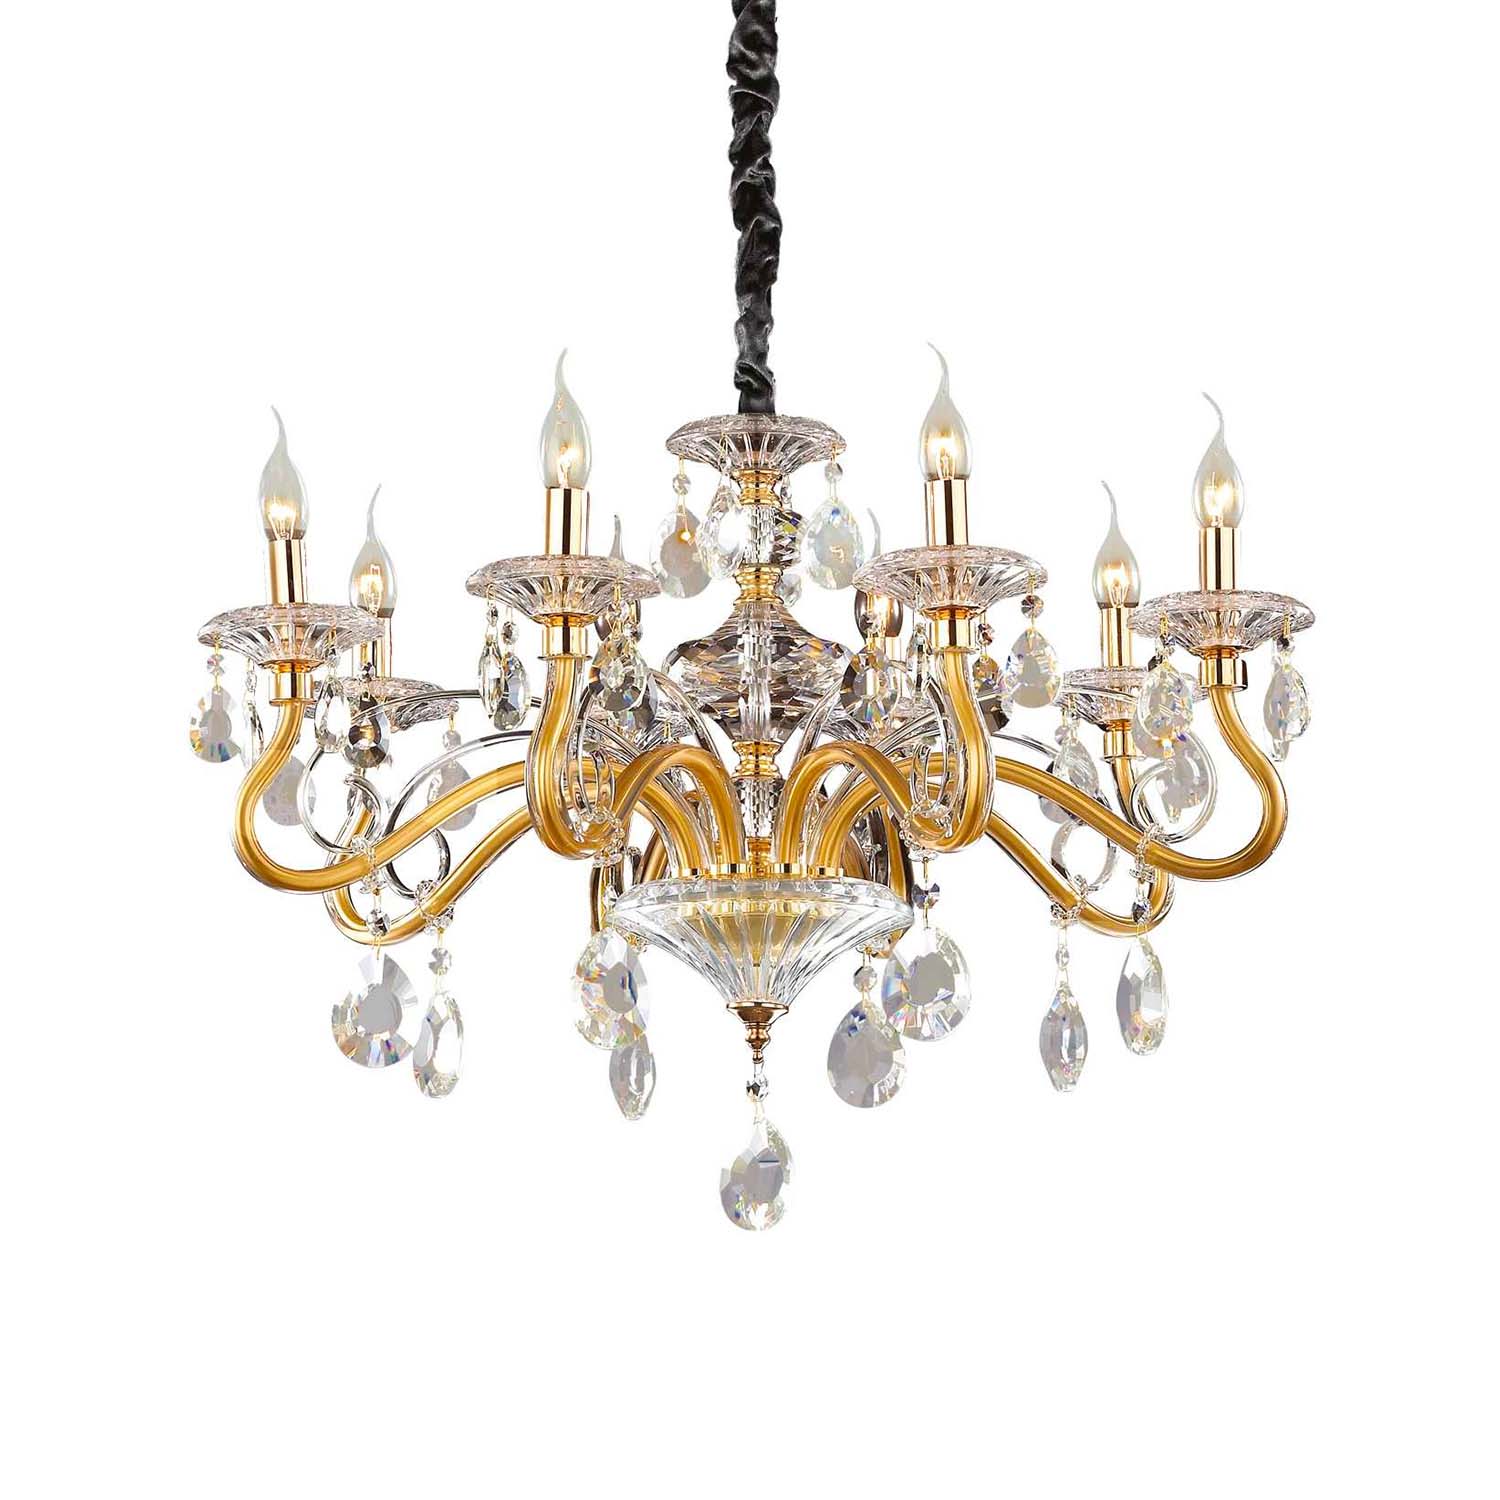 NEGRESCO - Golden chandelier with glass and crystal pendants